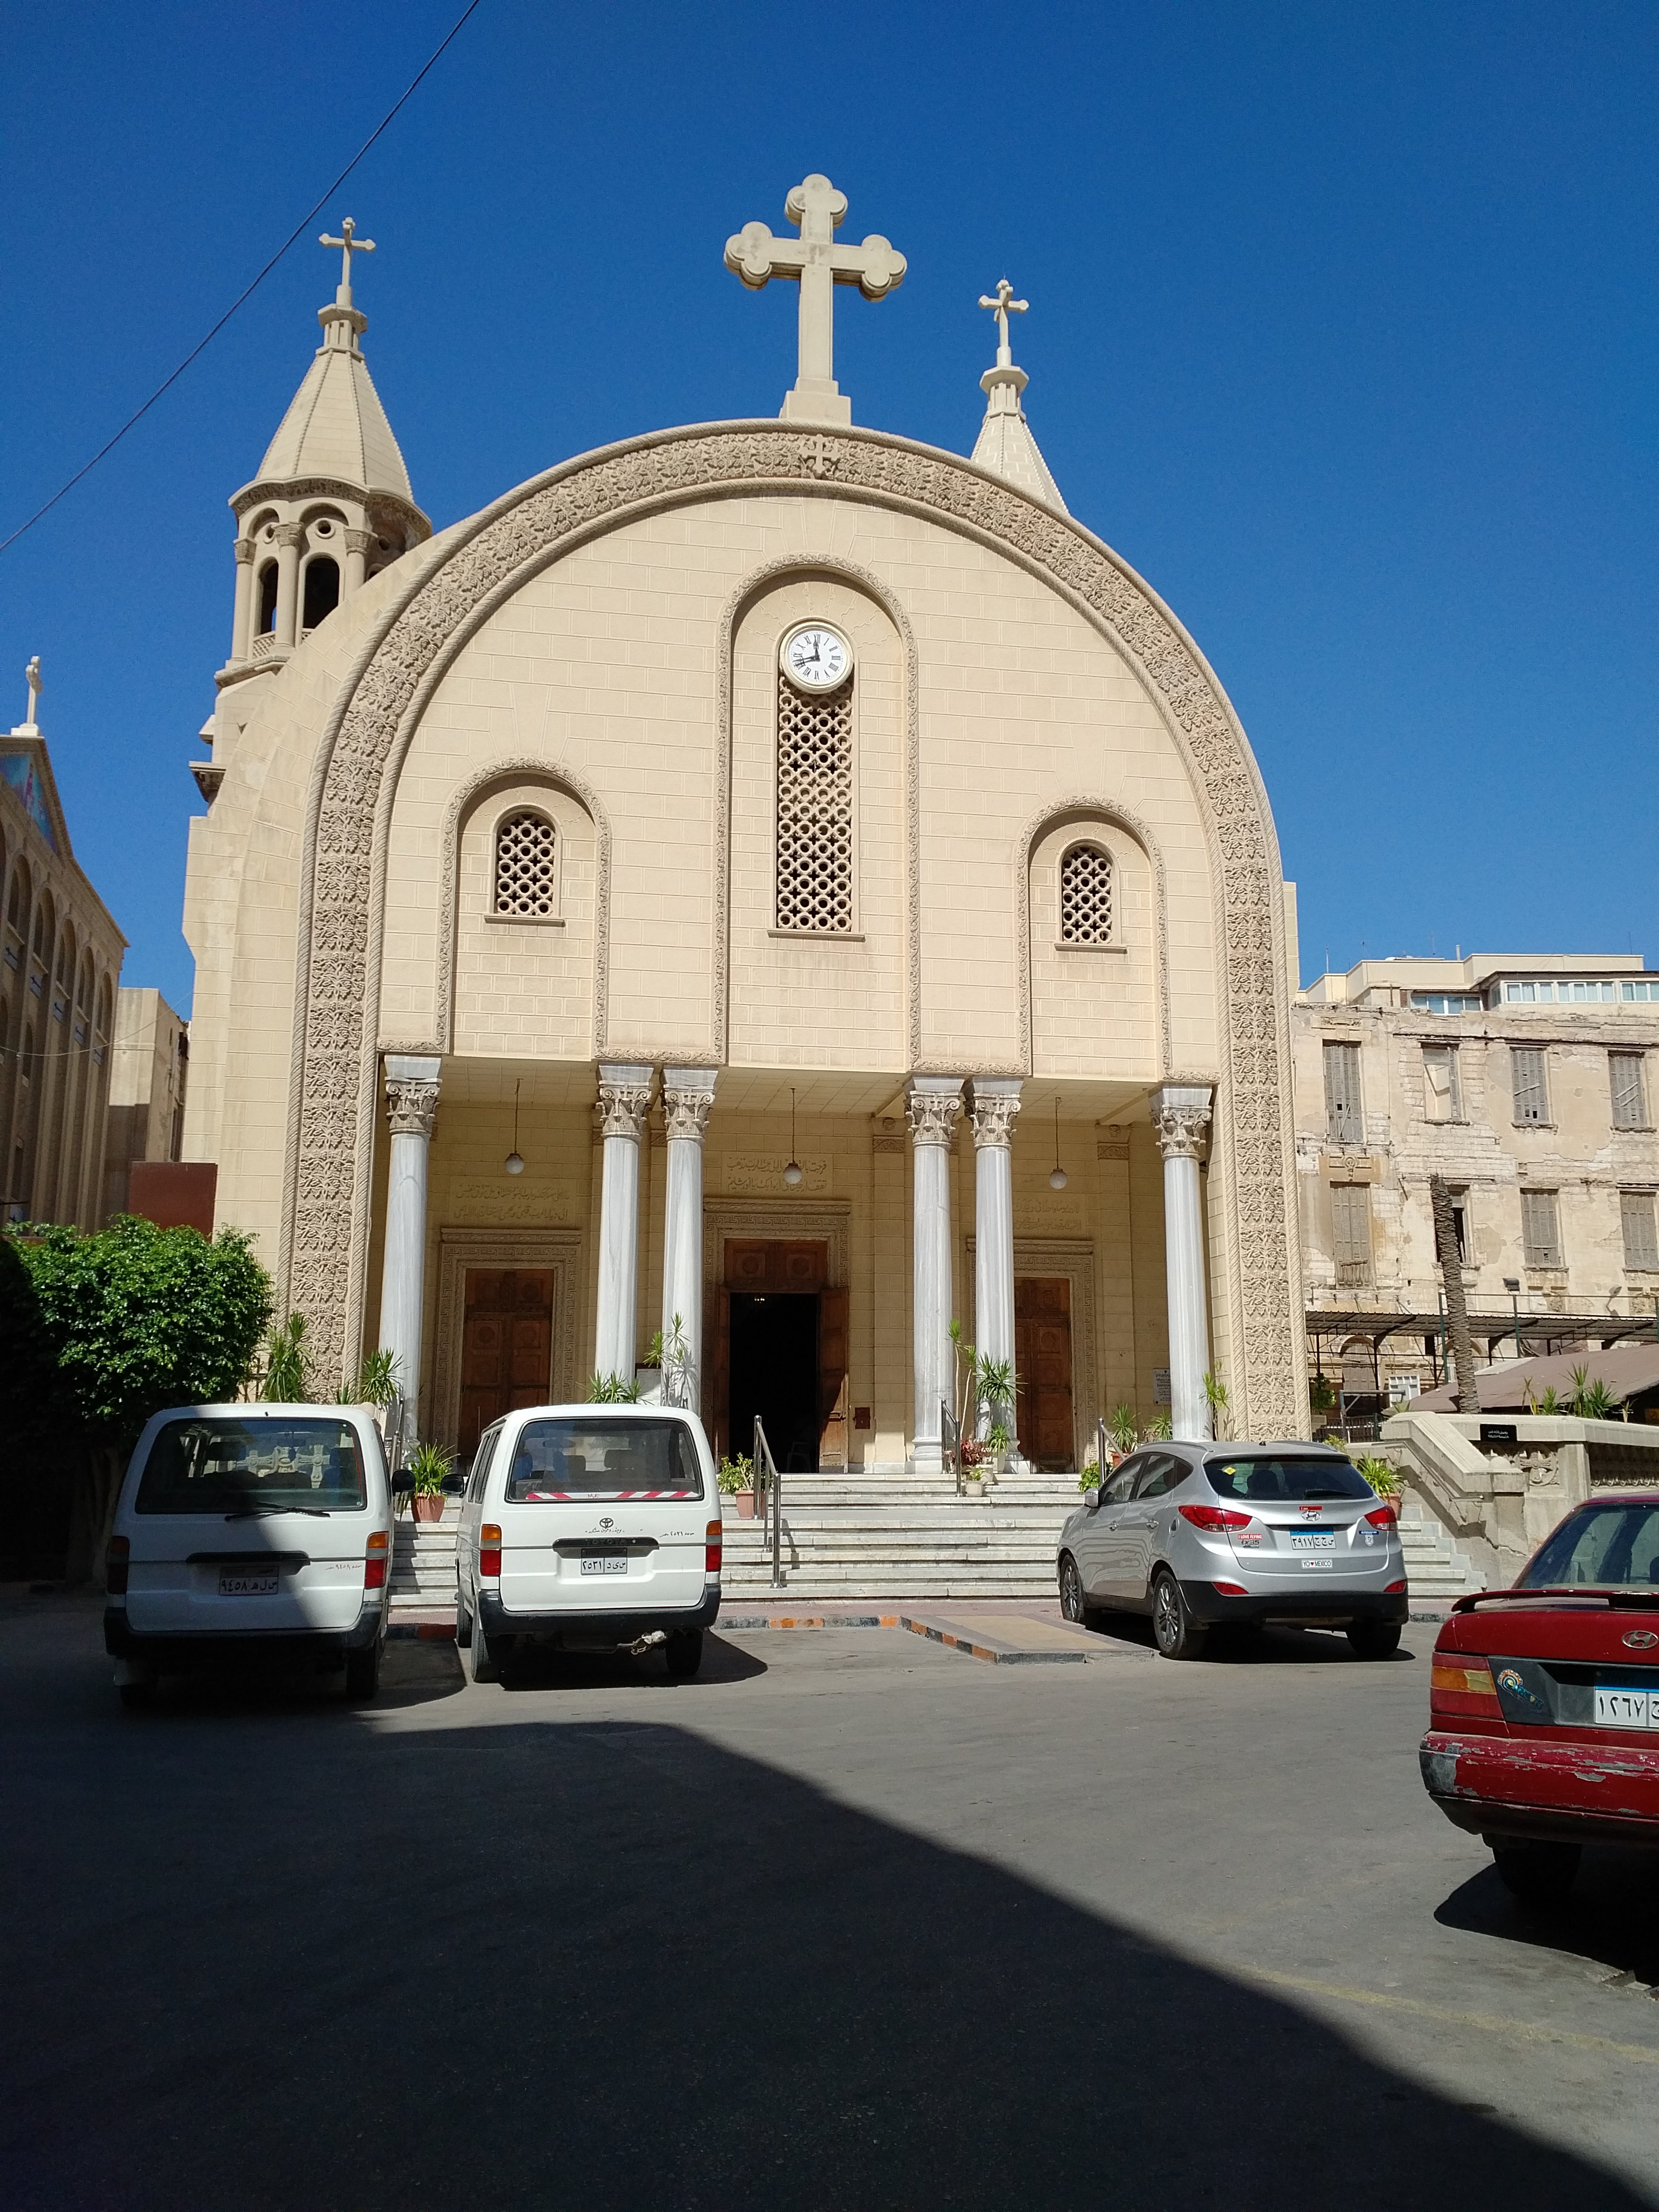 ALEXANDRIA, Church of St.
Catherine of Alexandria